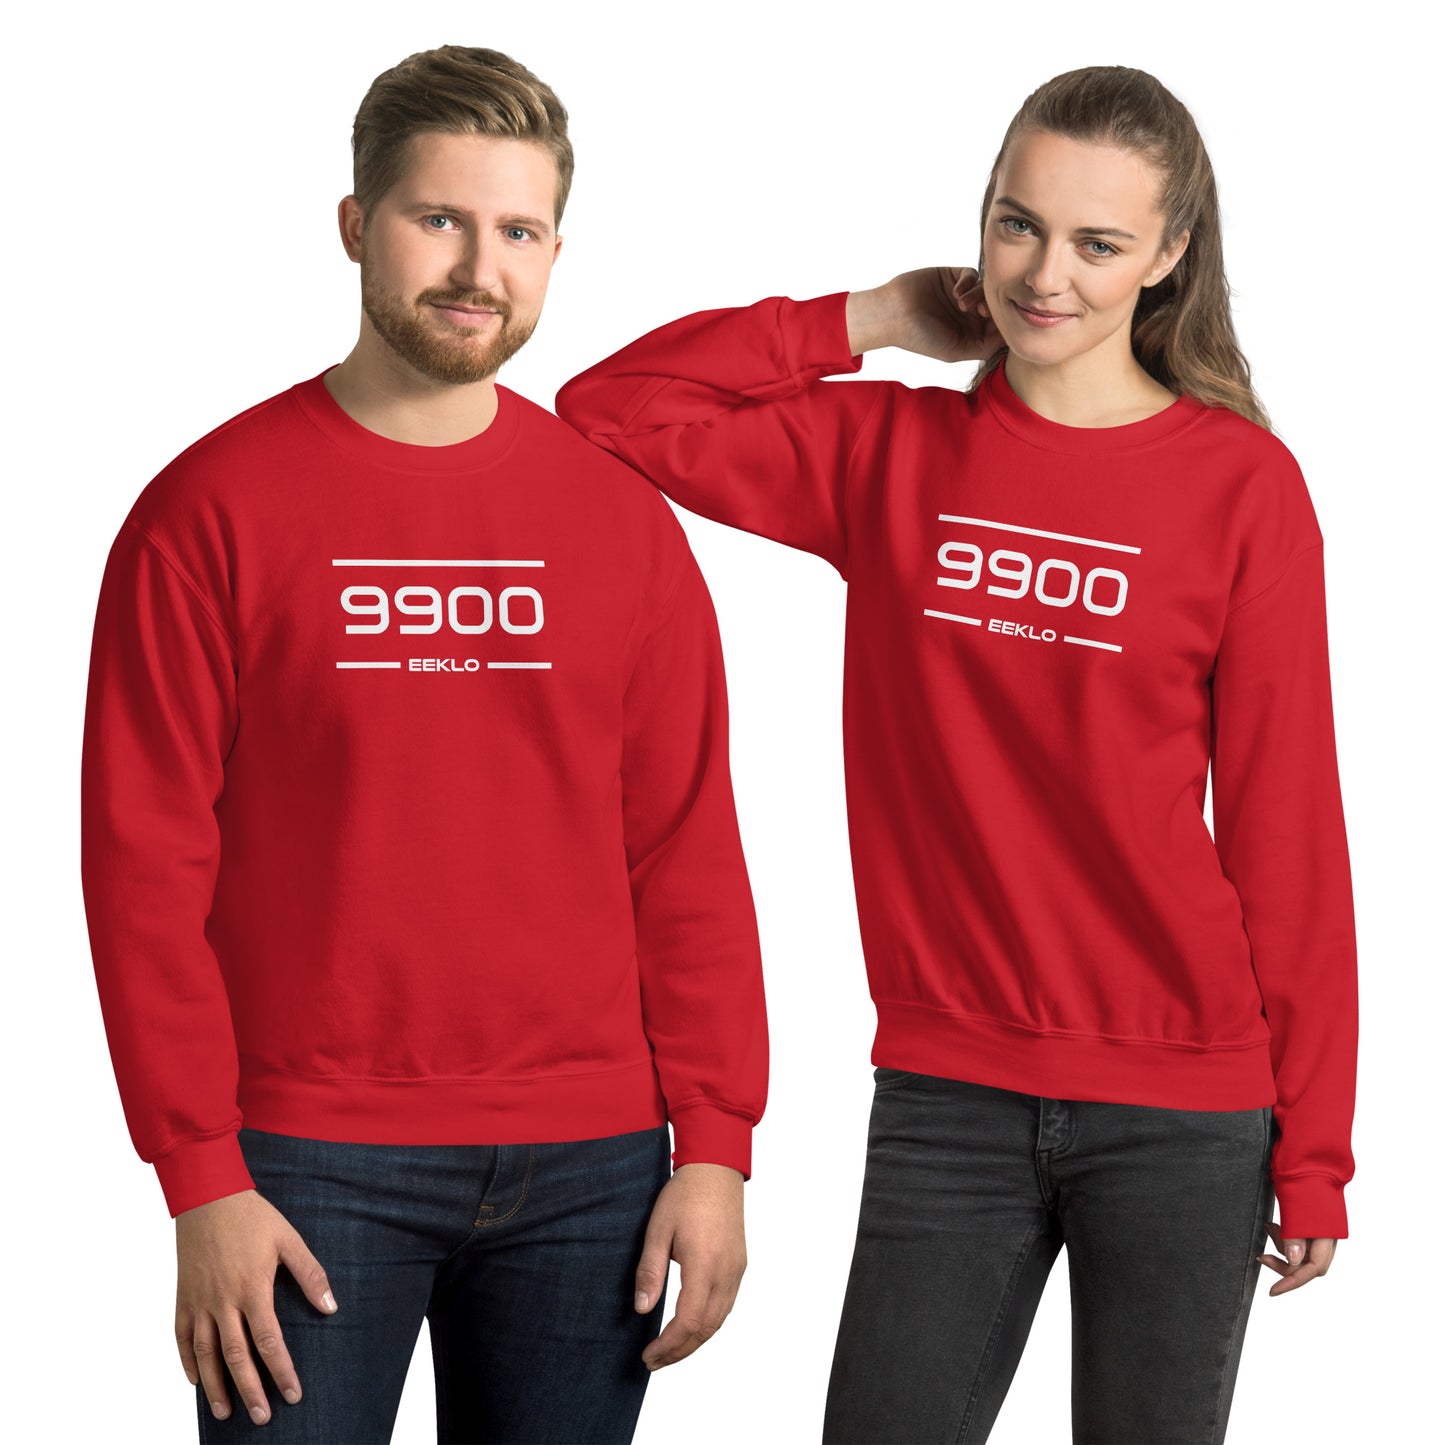 Sweater - 9900 - Eeklo (M/V)